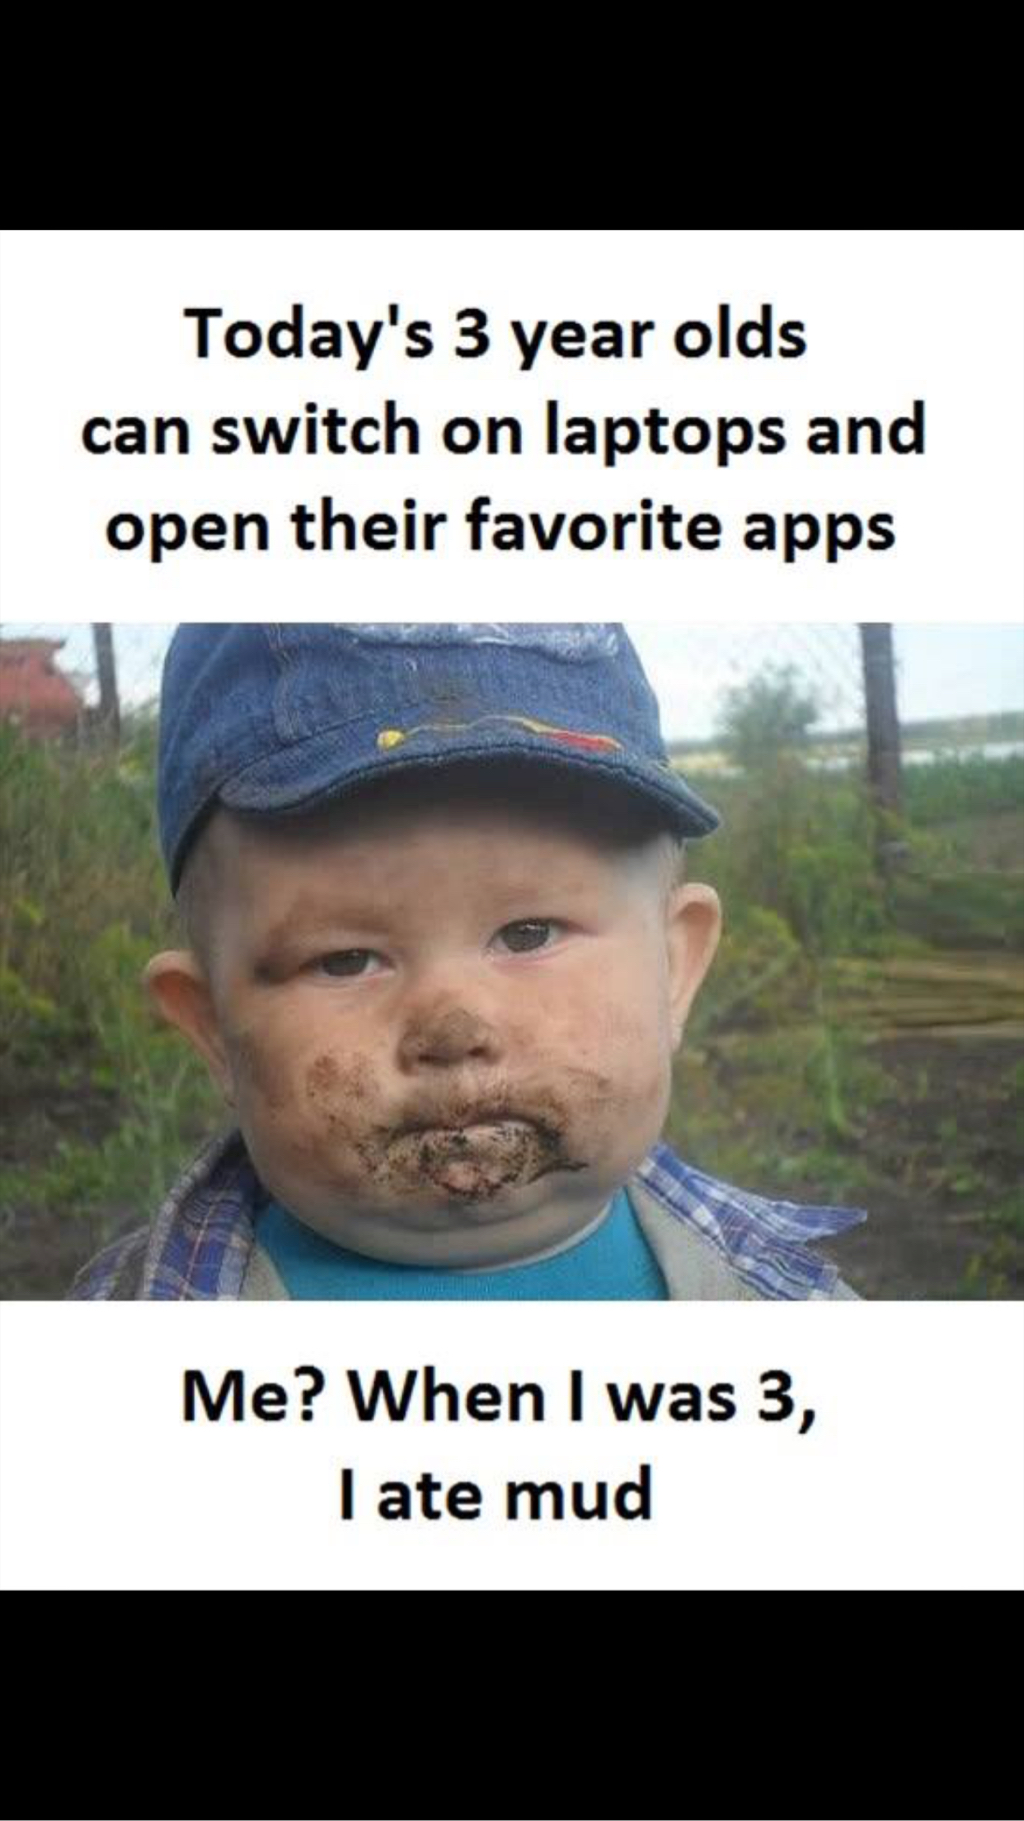 Joke4Fun Memes: I ate mud